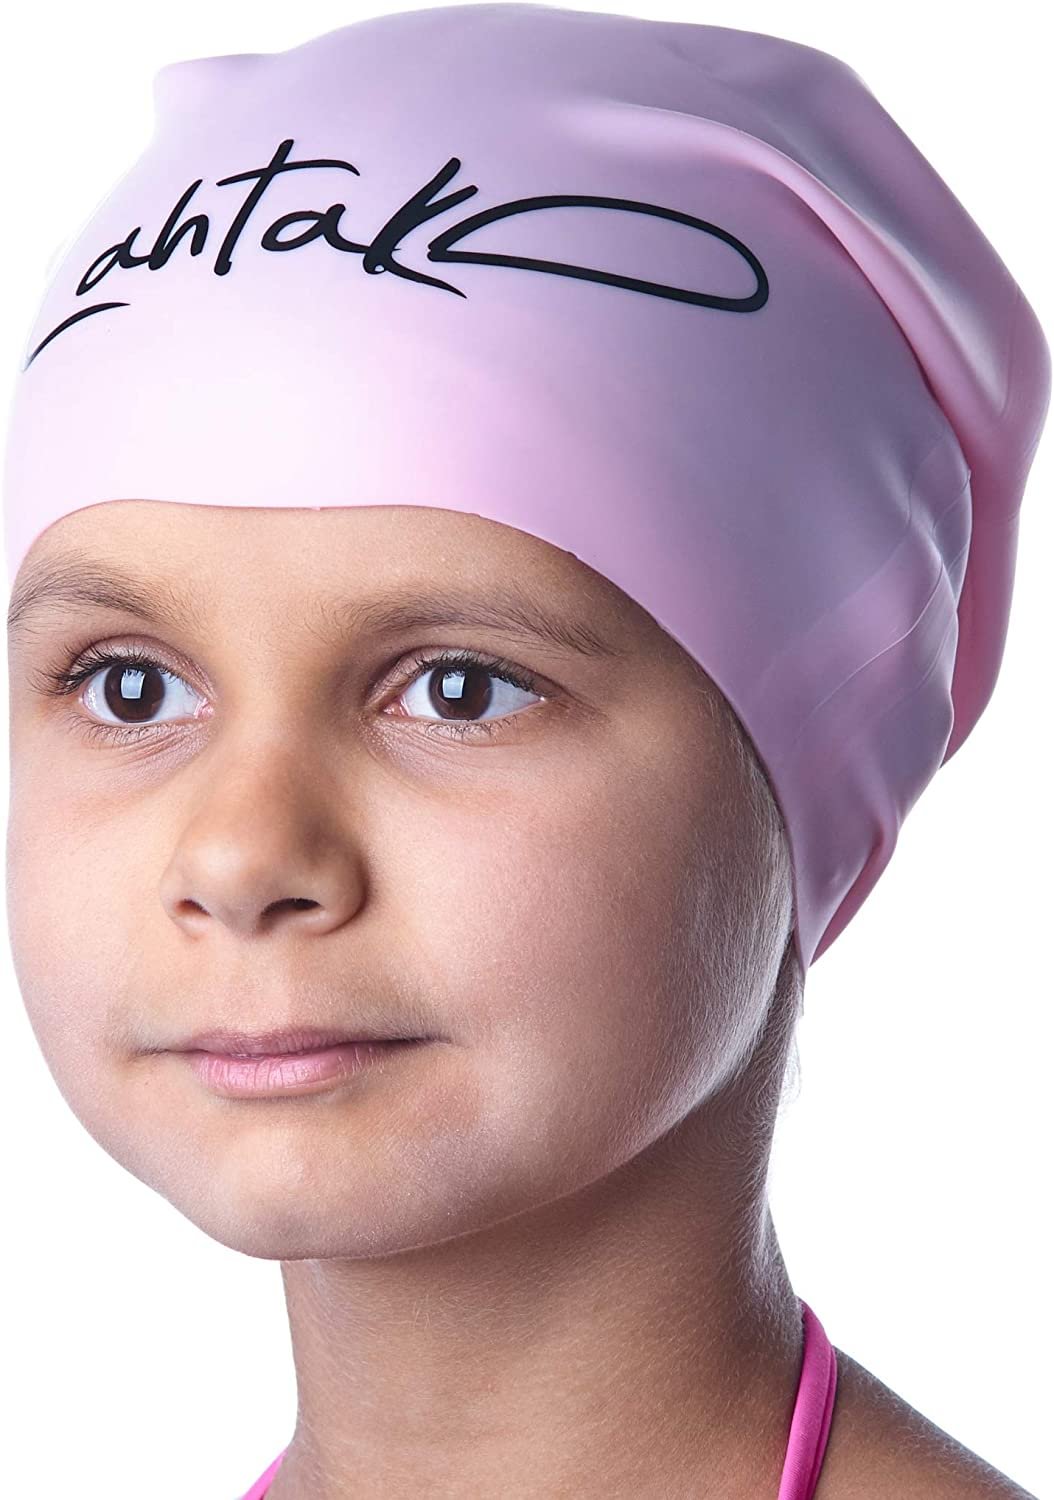 Swim Caps for Long Hair Kids - Swimming Cap for Girls Boys Kids Teens with Long Curly Hair Braids Dreadlocks